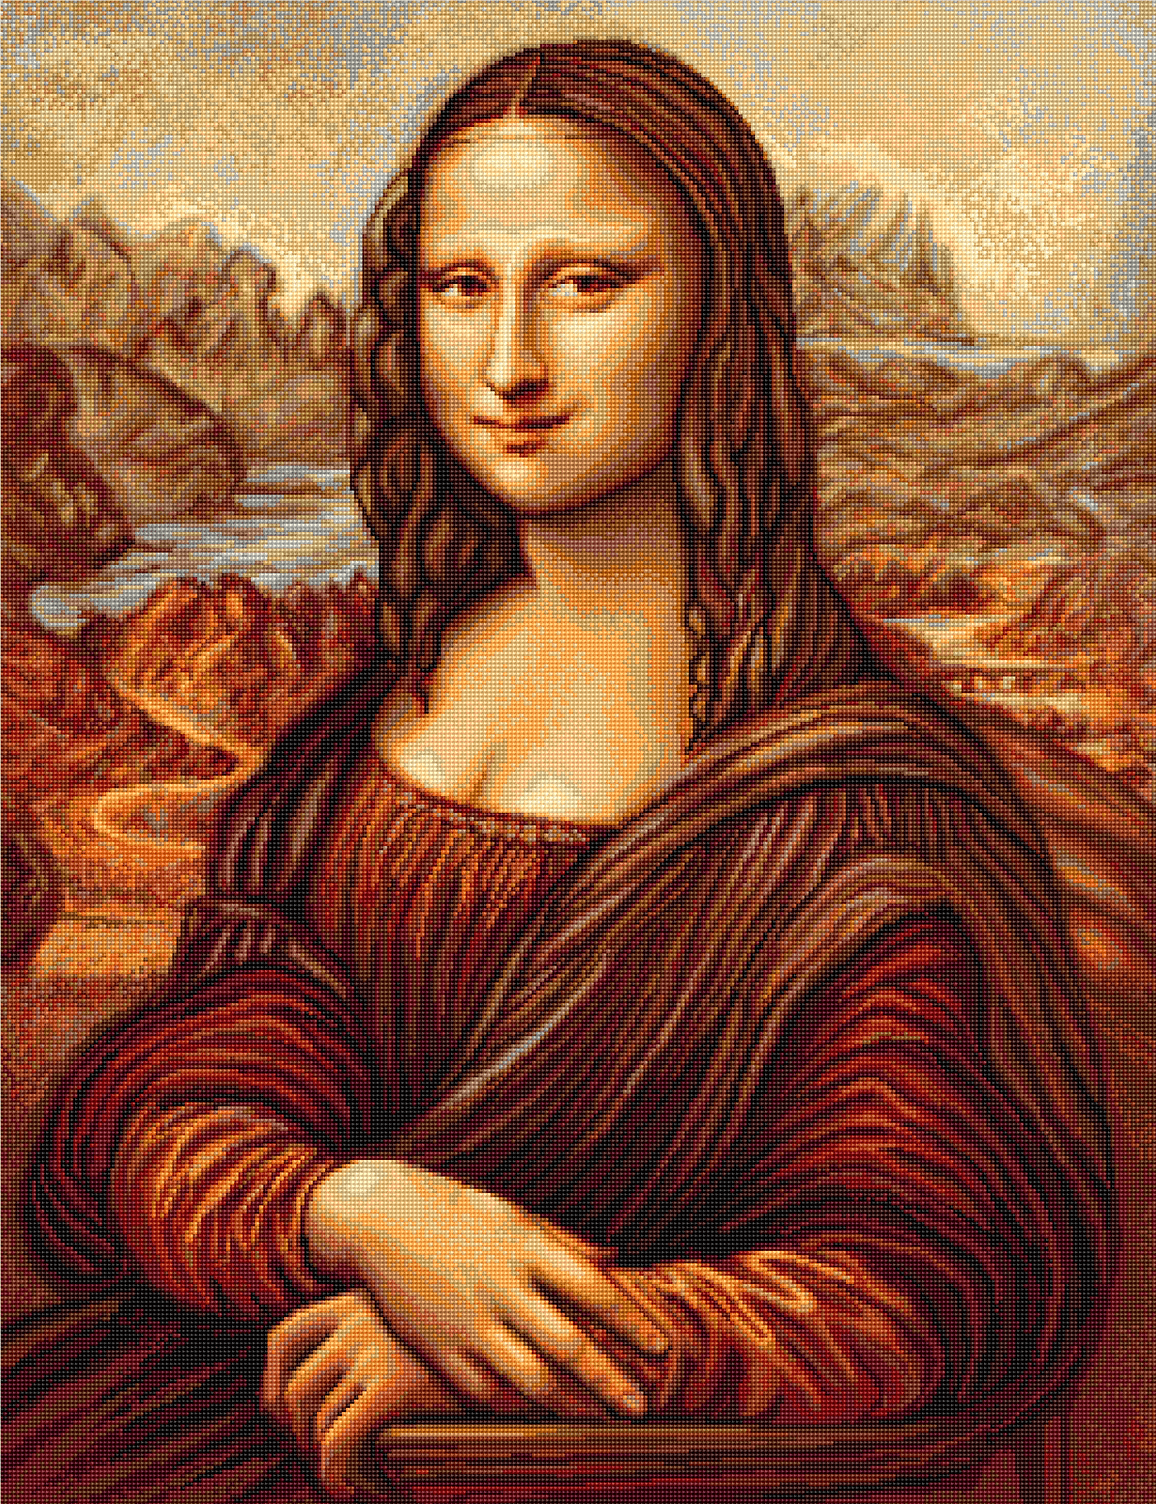 Cross Stitch Kit Luca-S - Mona Lisa - Leonardo da Vinci, B416 - Luca-S